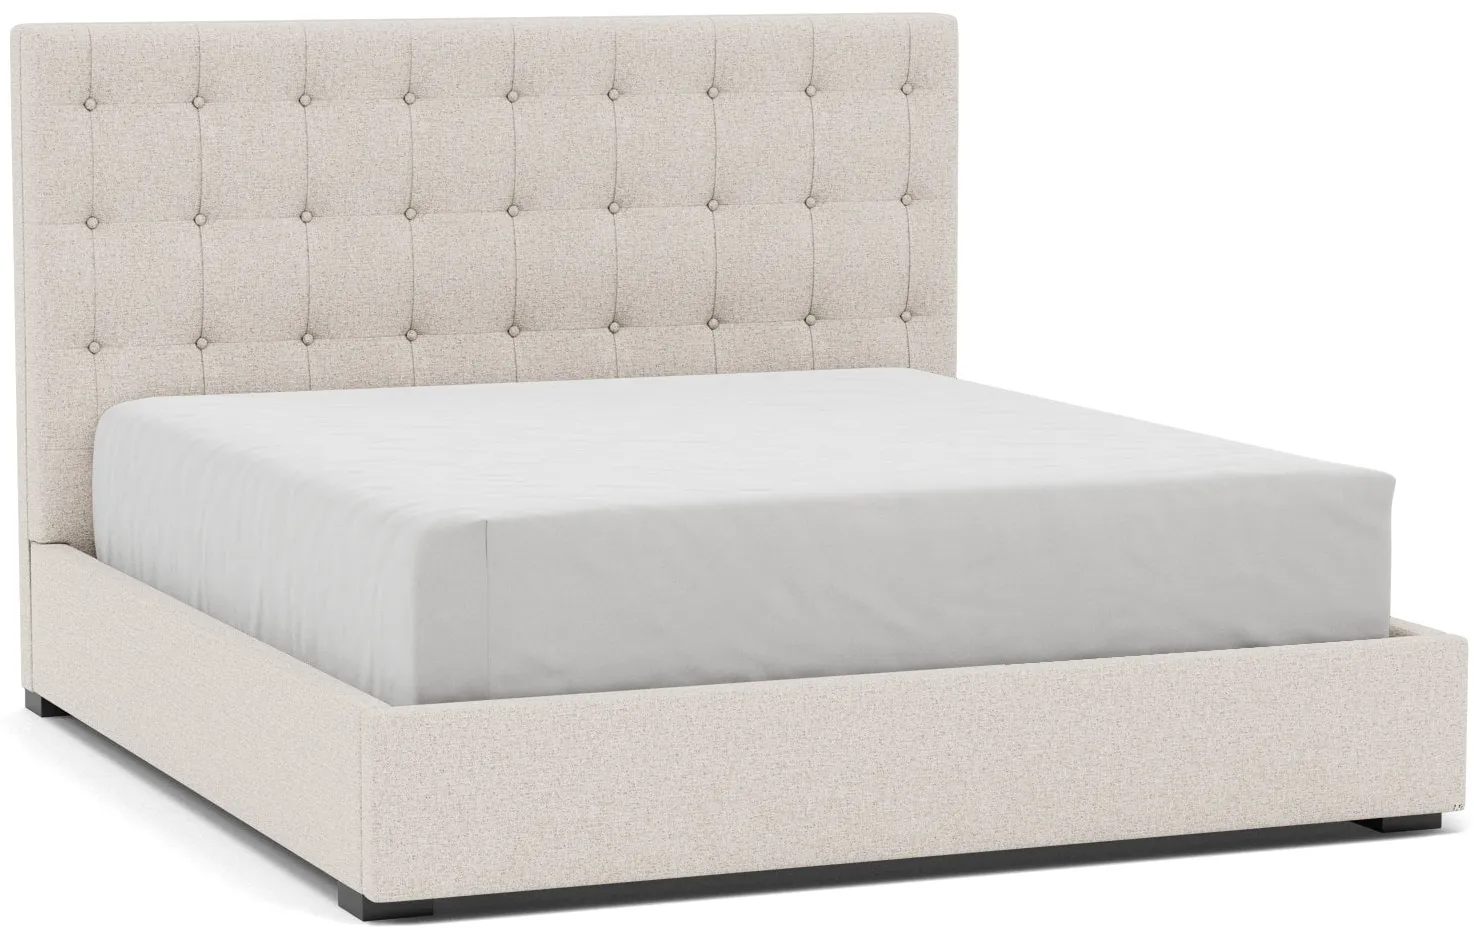 Abby King Upholstered Bed in Merit Dove